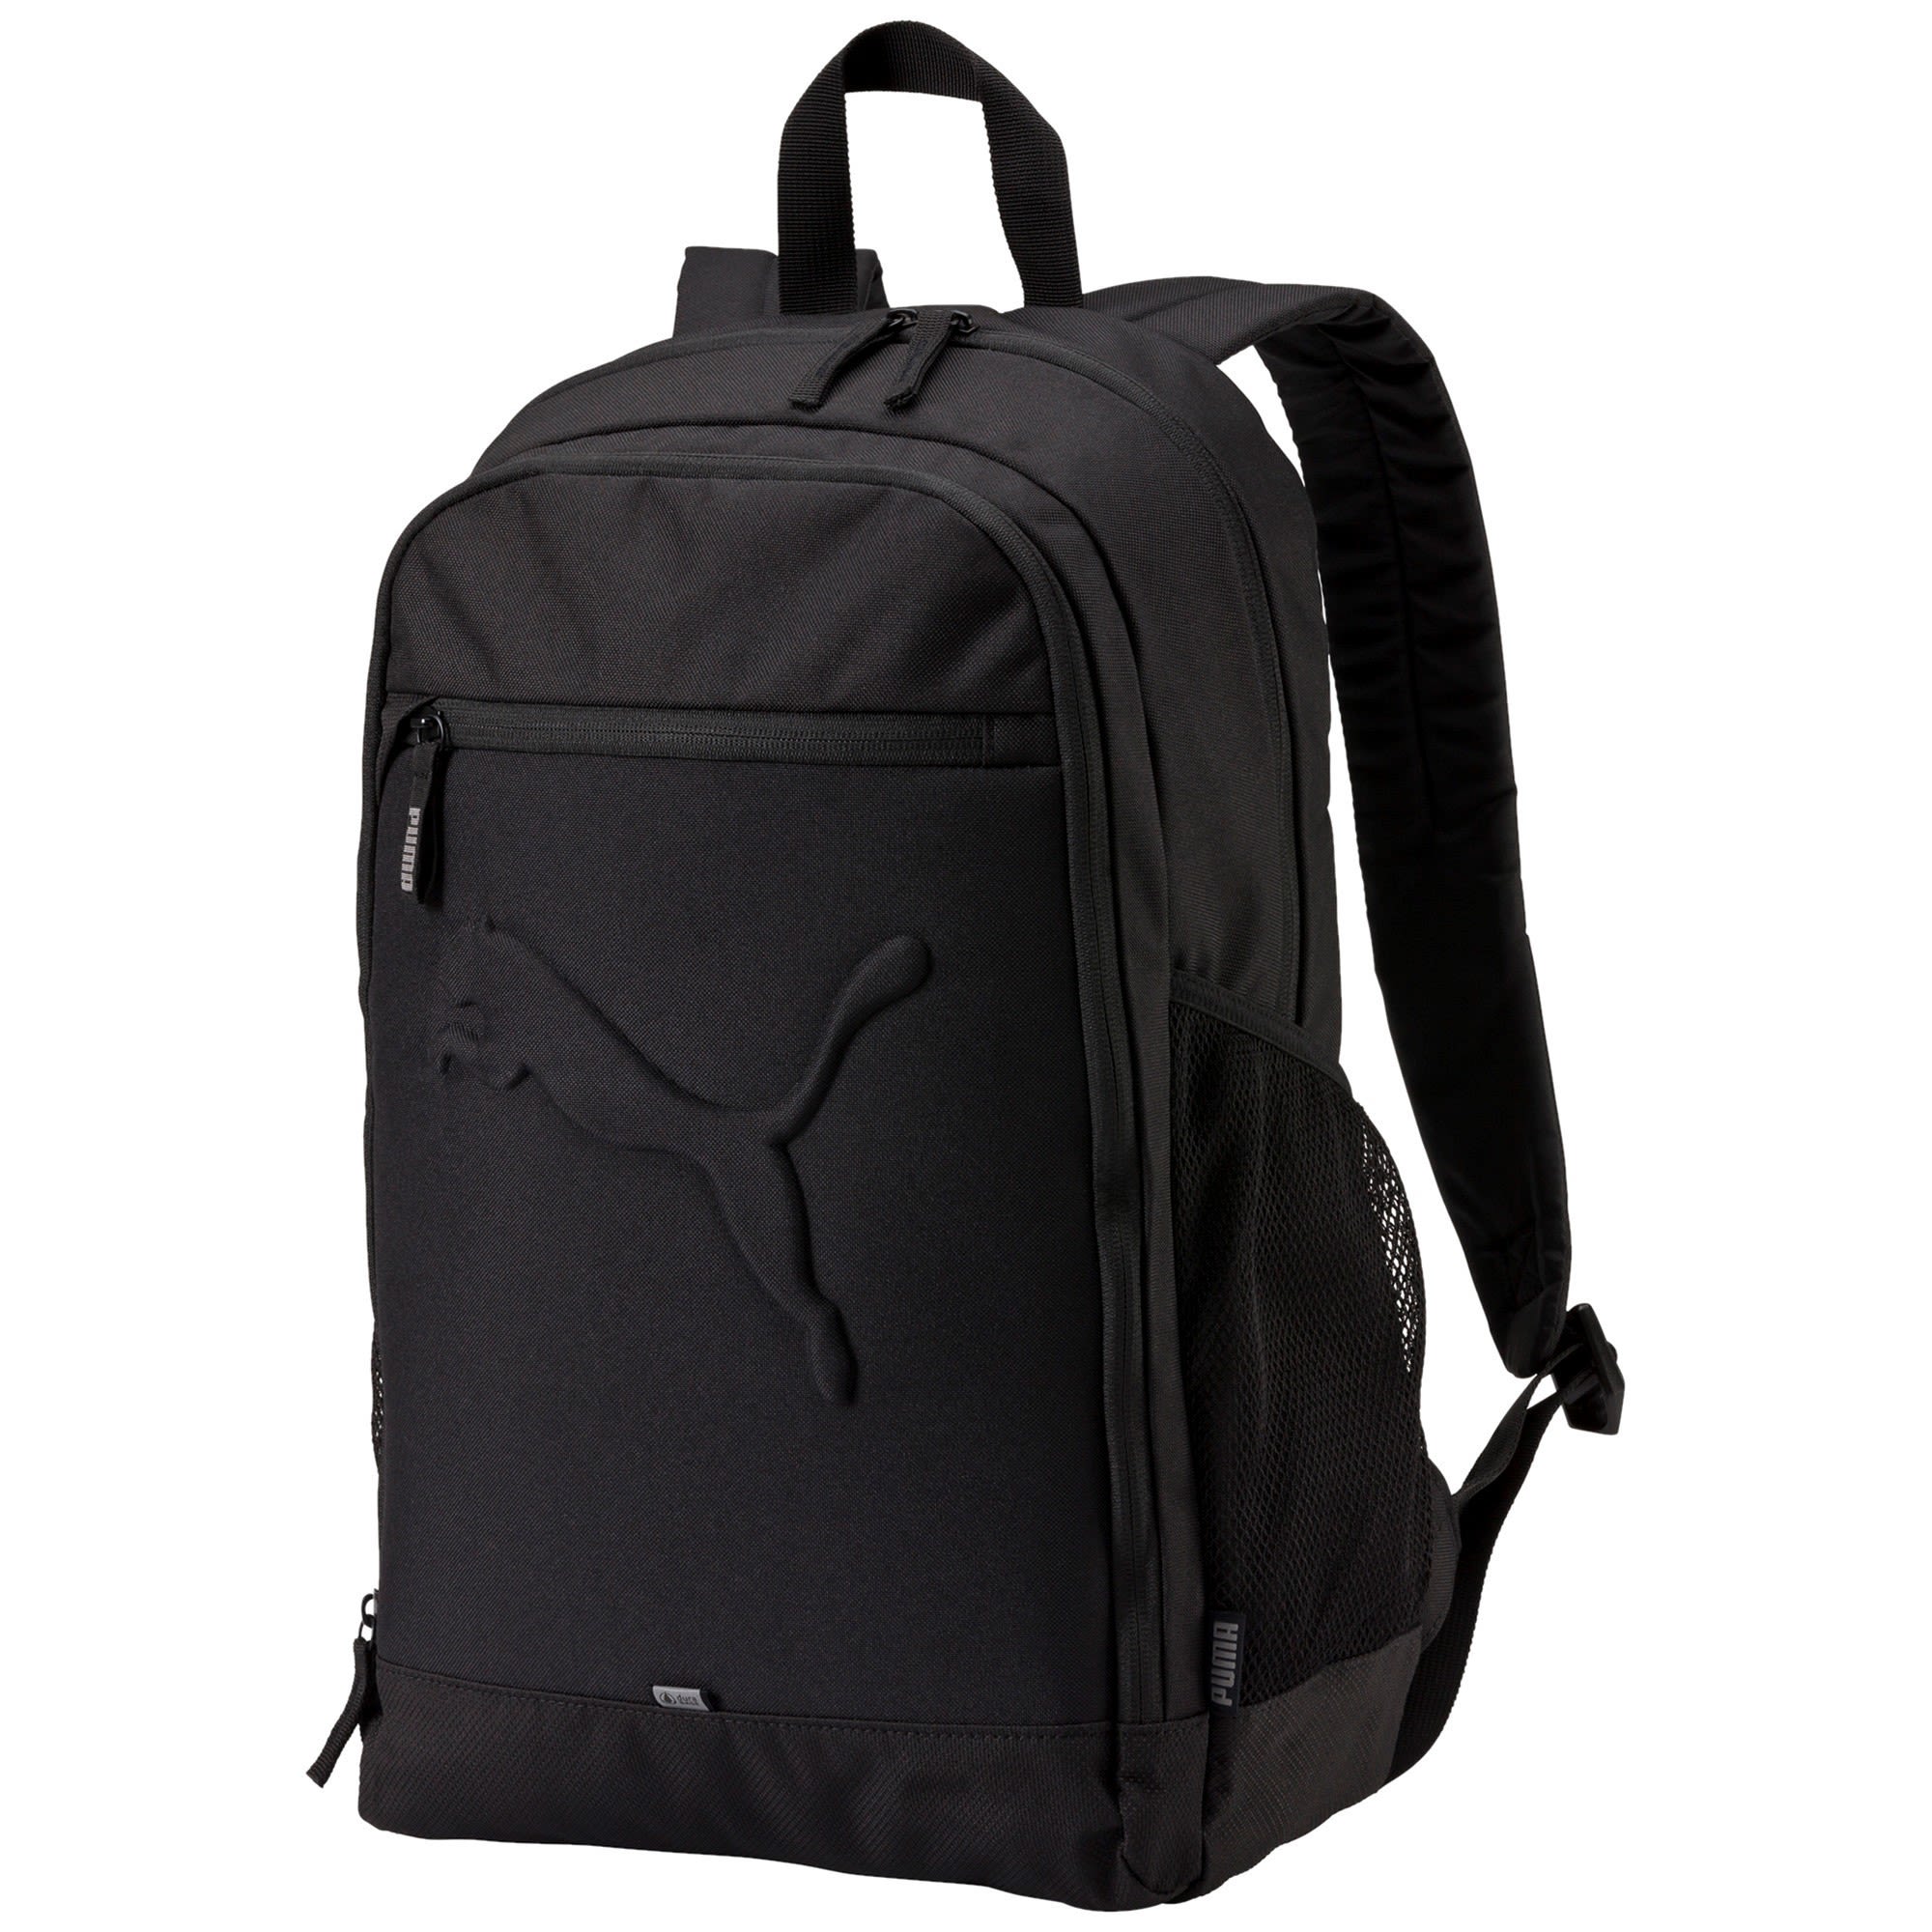 Puma Buzz Backpack Schwarz- Daypacks- Grsse 26l - Farbe Black